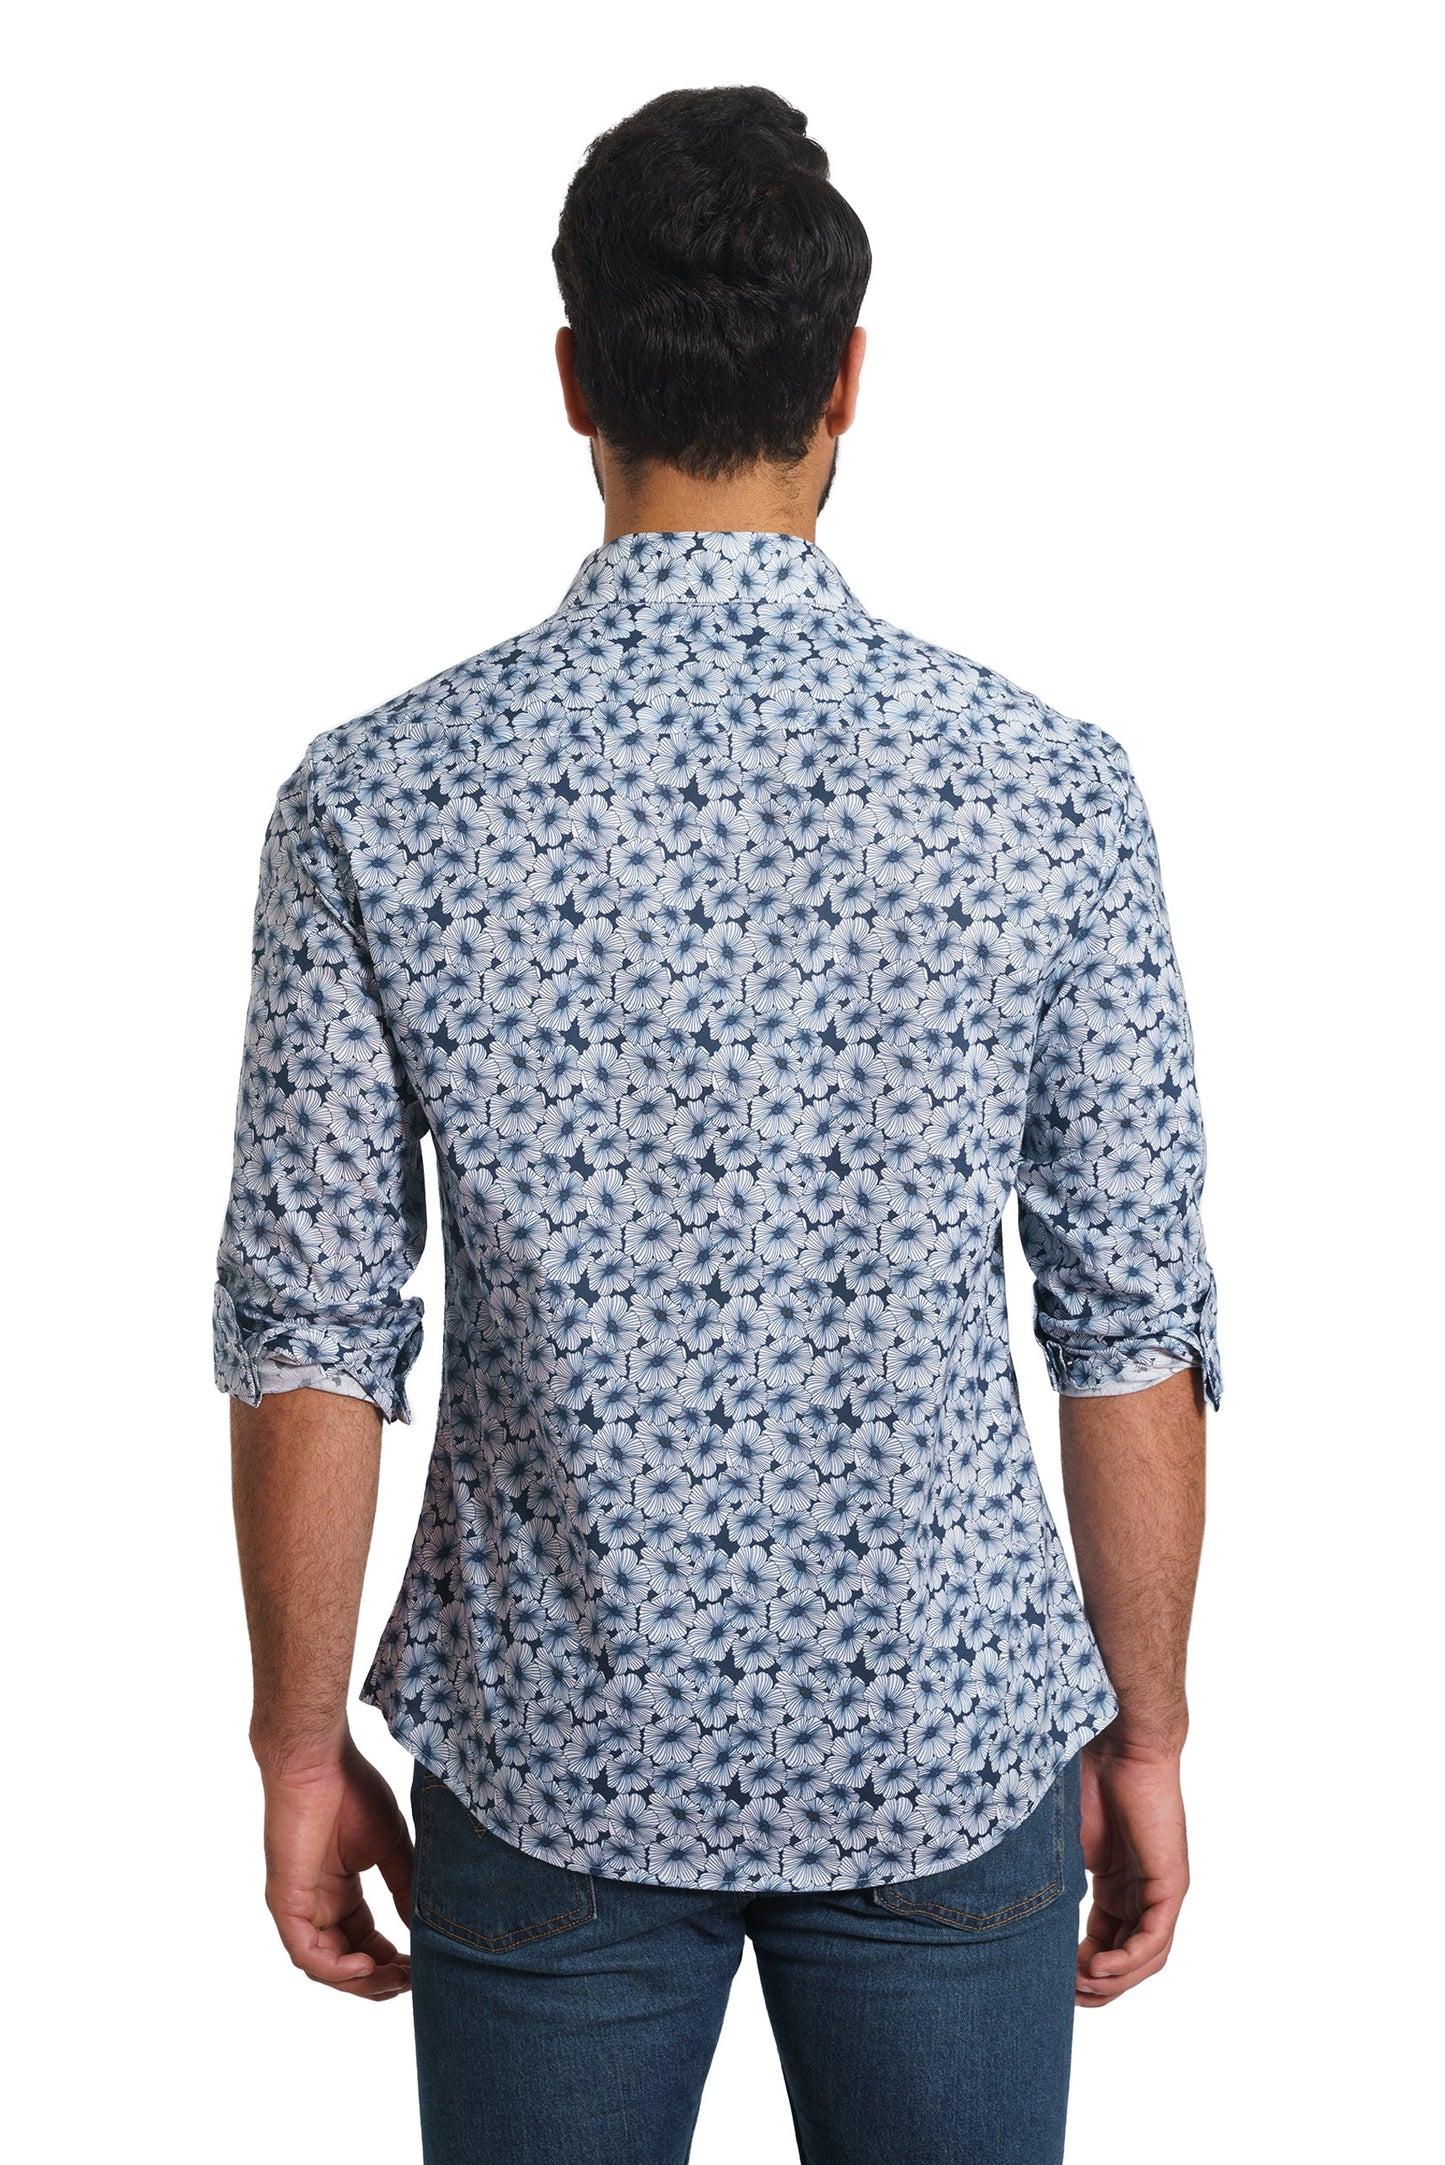 Midnight Blue Long Sleeve Shirt TH-2851 Back